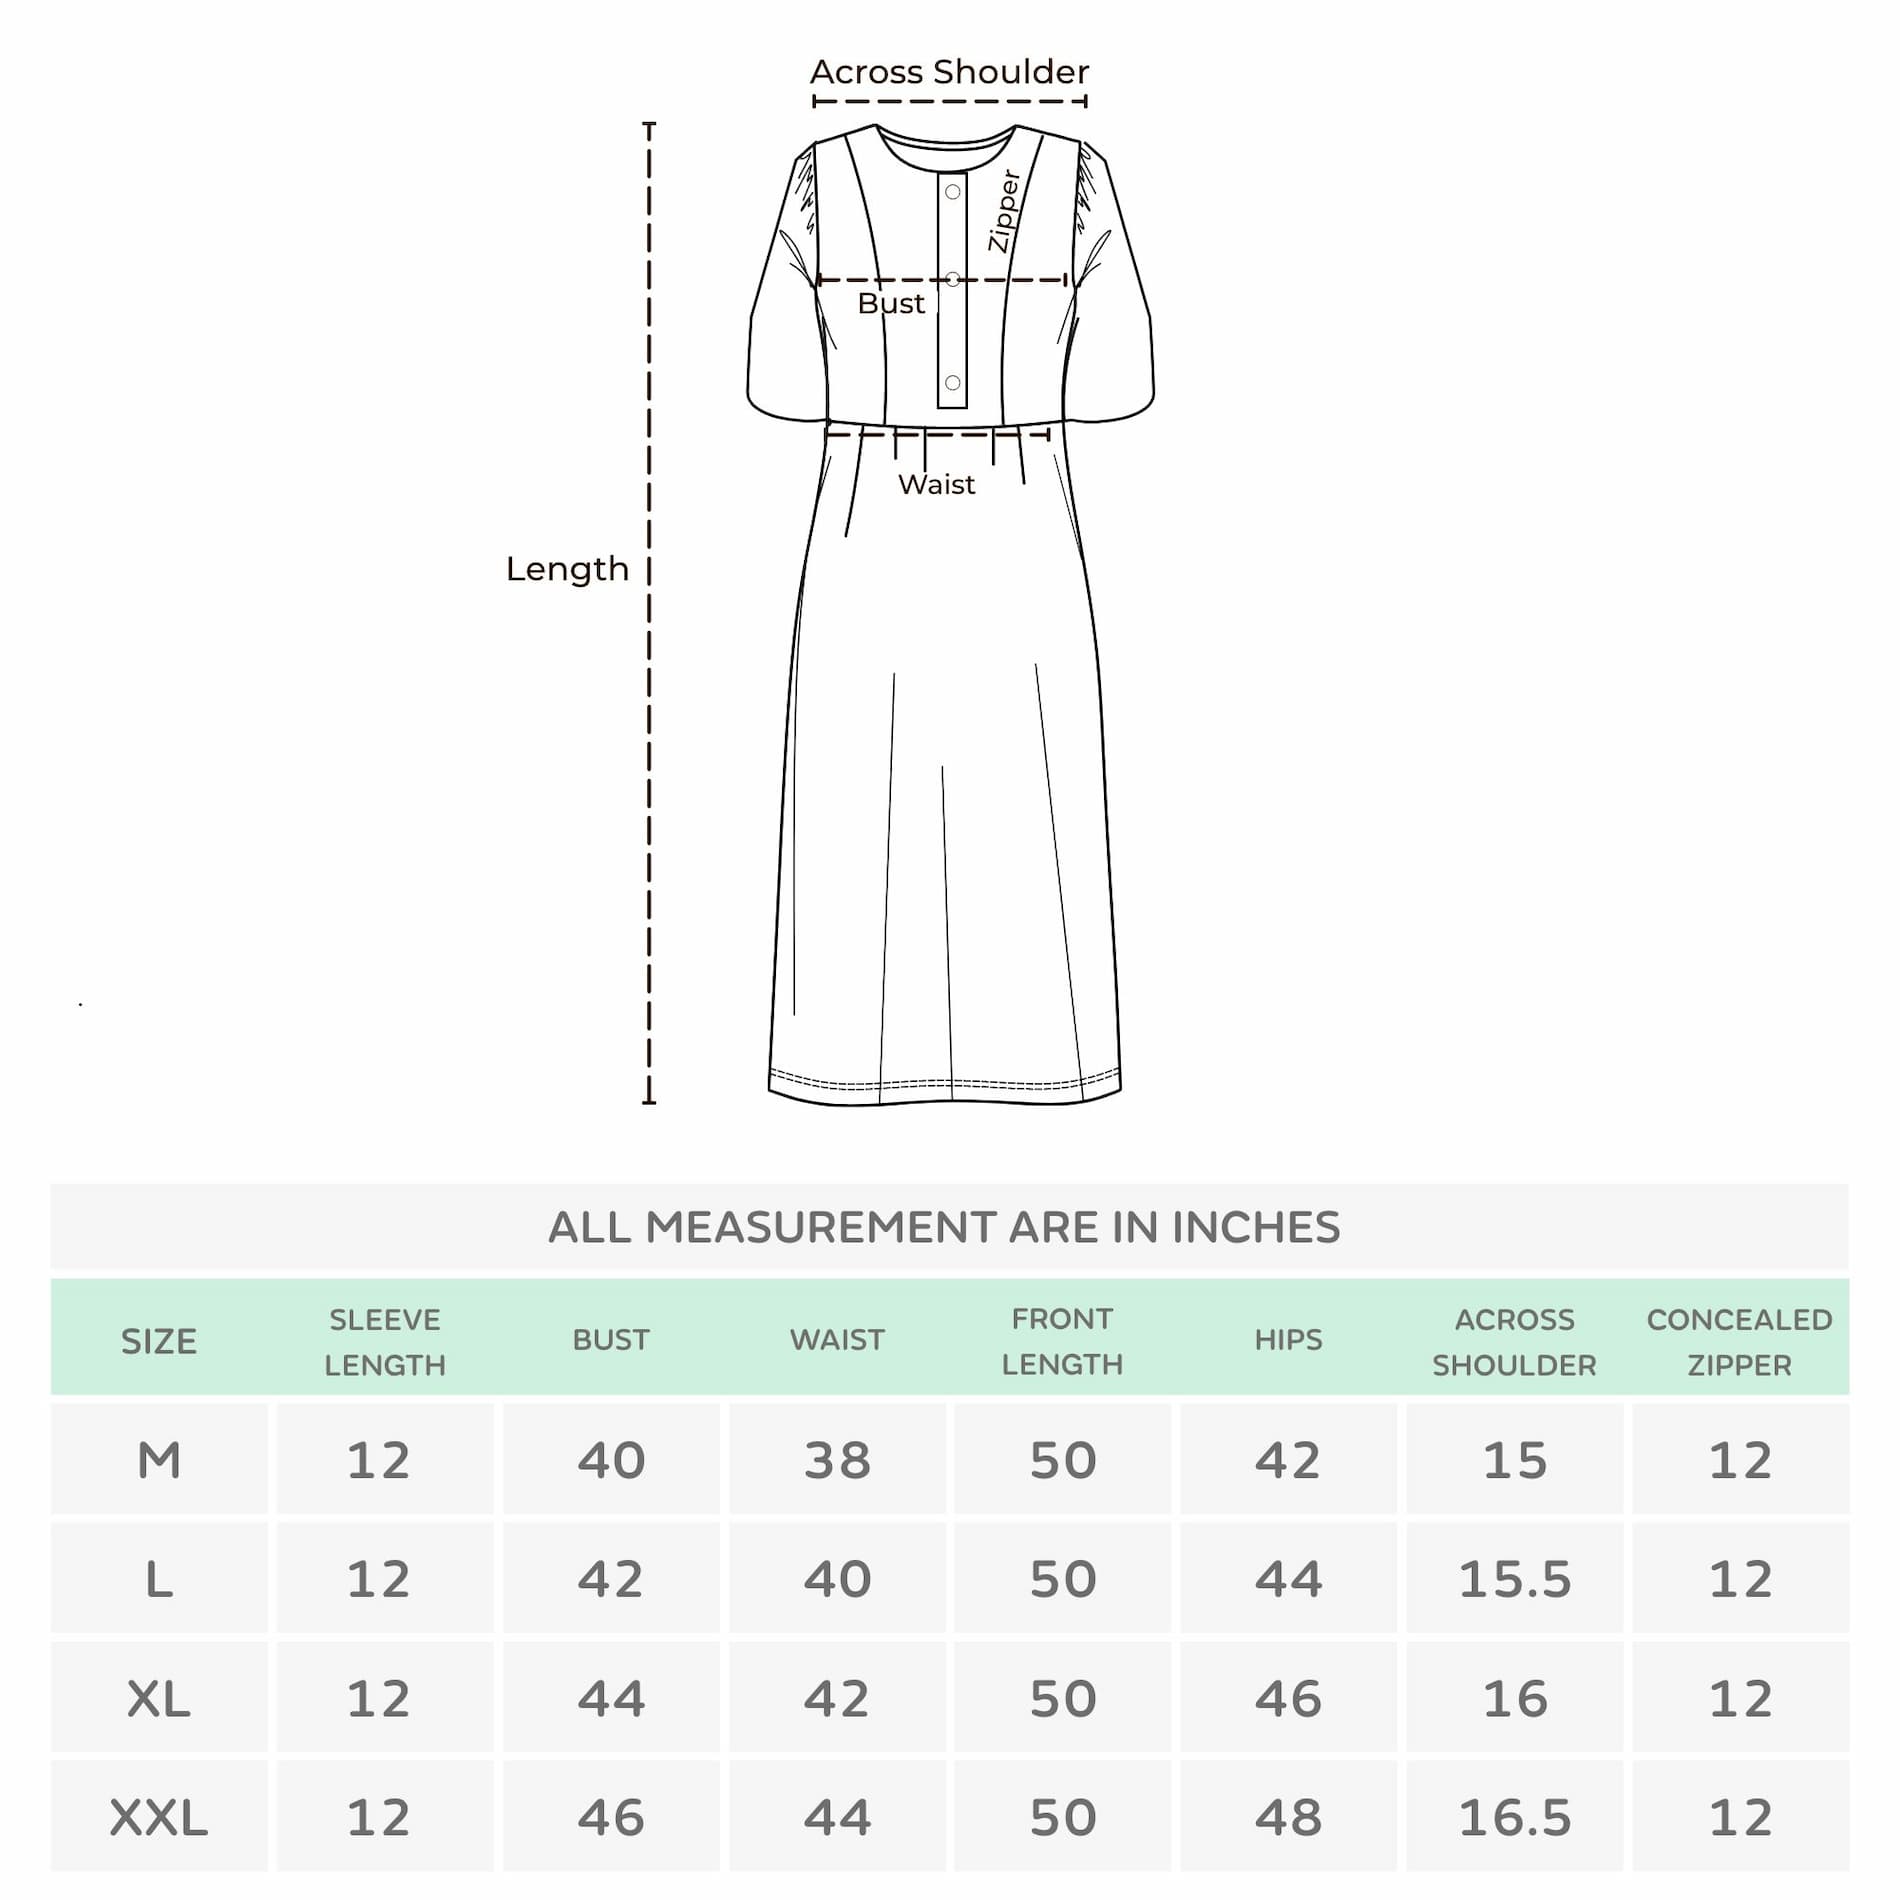 Mylo Pre & Post Maternity /Nursing Maxi Dress with both sides Zipper for Easy Feeding – Garden Flowers -Teal –XL